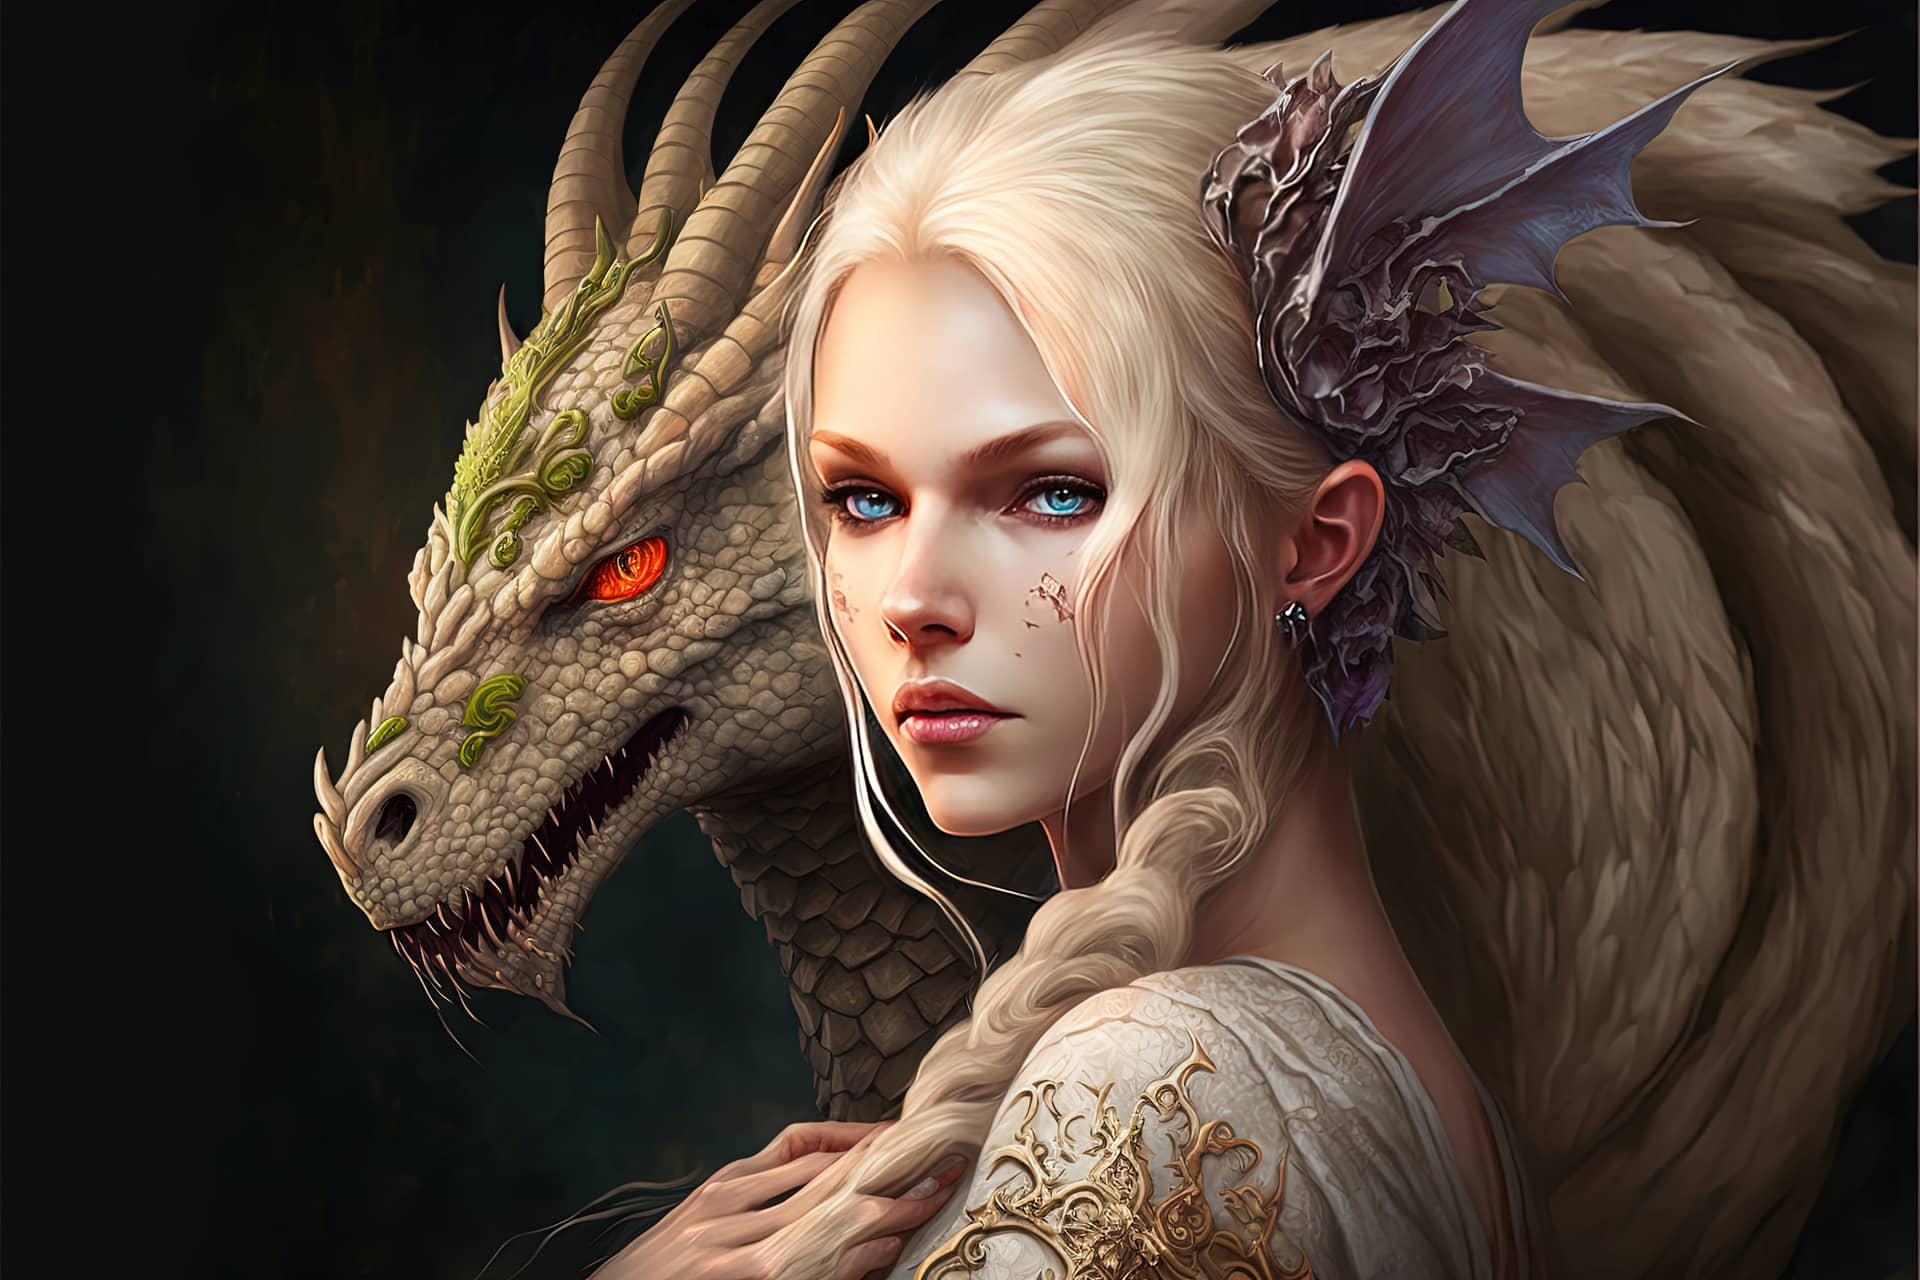 Dragon pet fantasy creature generative cool image for profile